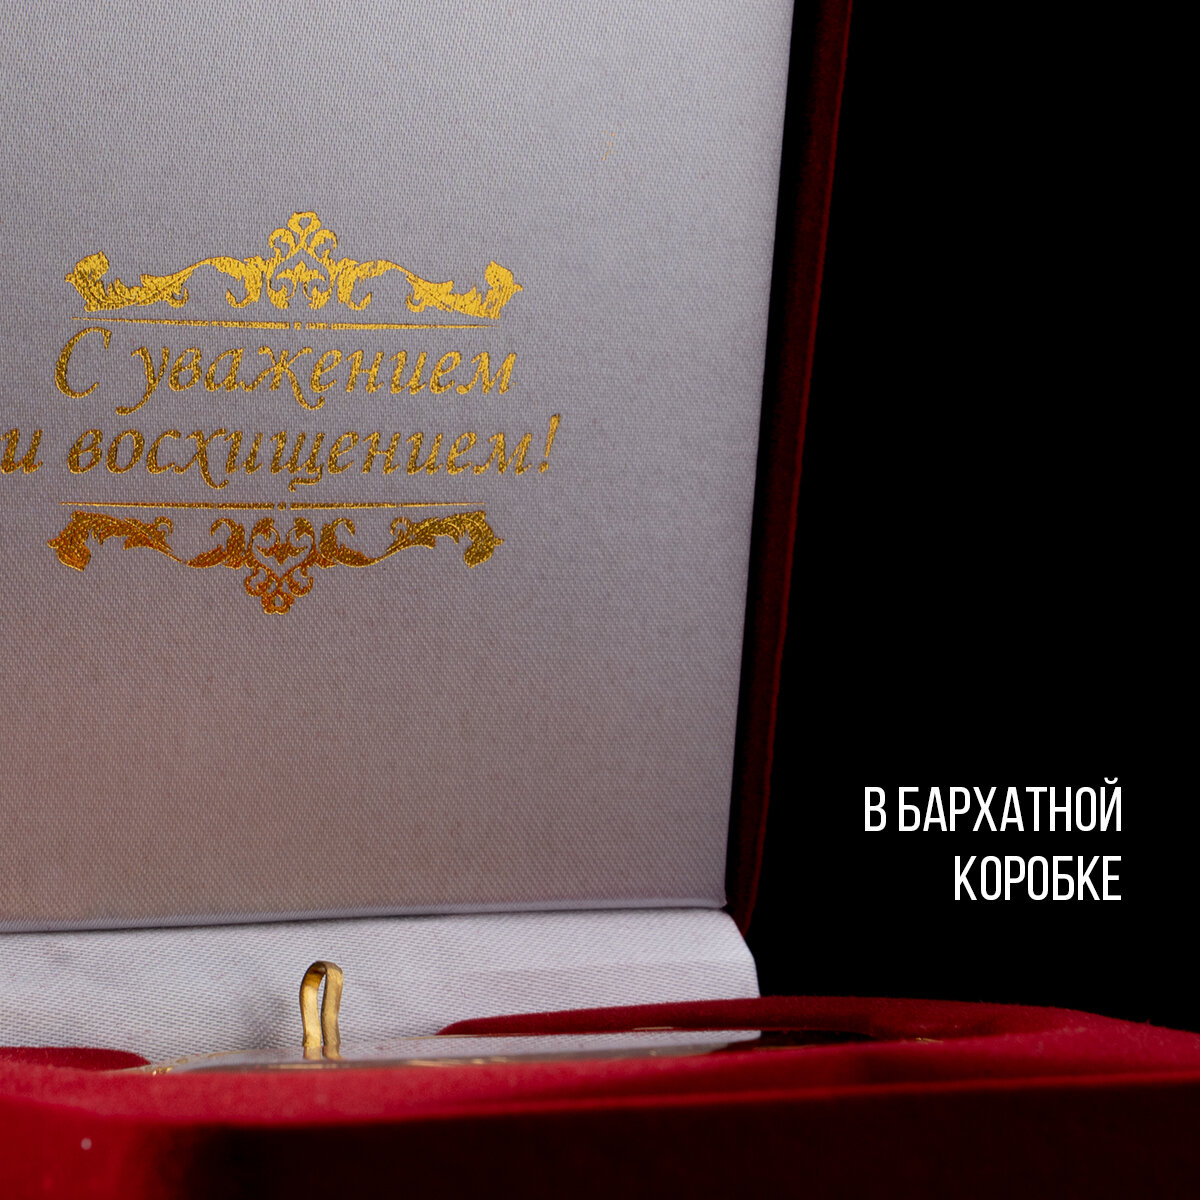 Медаль "Золотая бабушка", диам 7 см, в барх коробке, 8.9 х 8.9 х 3.8 см / Подарок